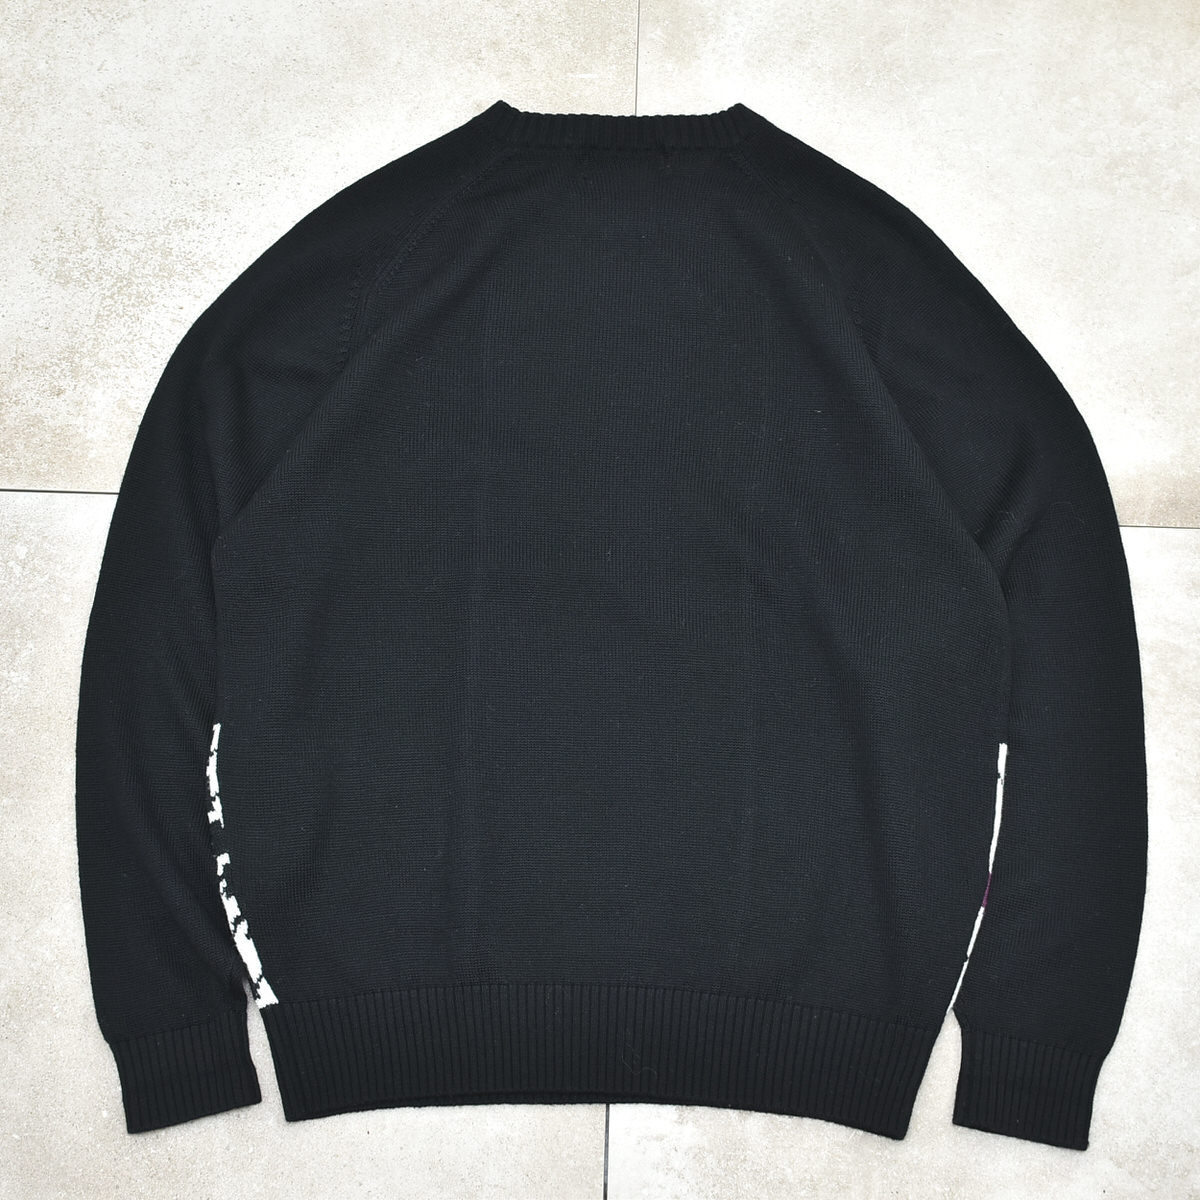 Argyle & Dogstooth panel design sweater мужской LL размер a-ga il & тысяч птица .. panel образец высокий мера 